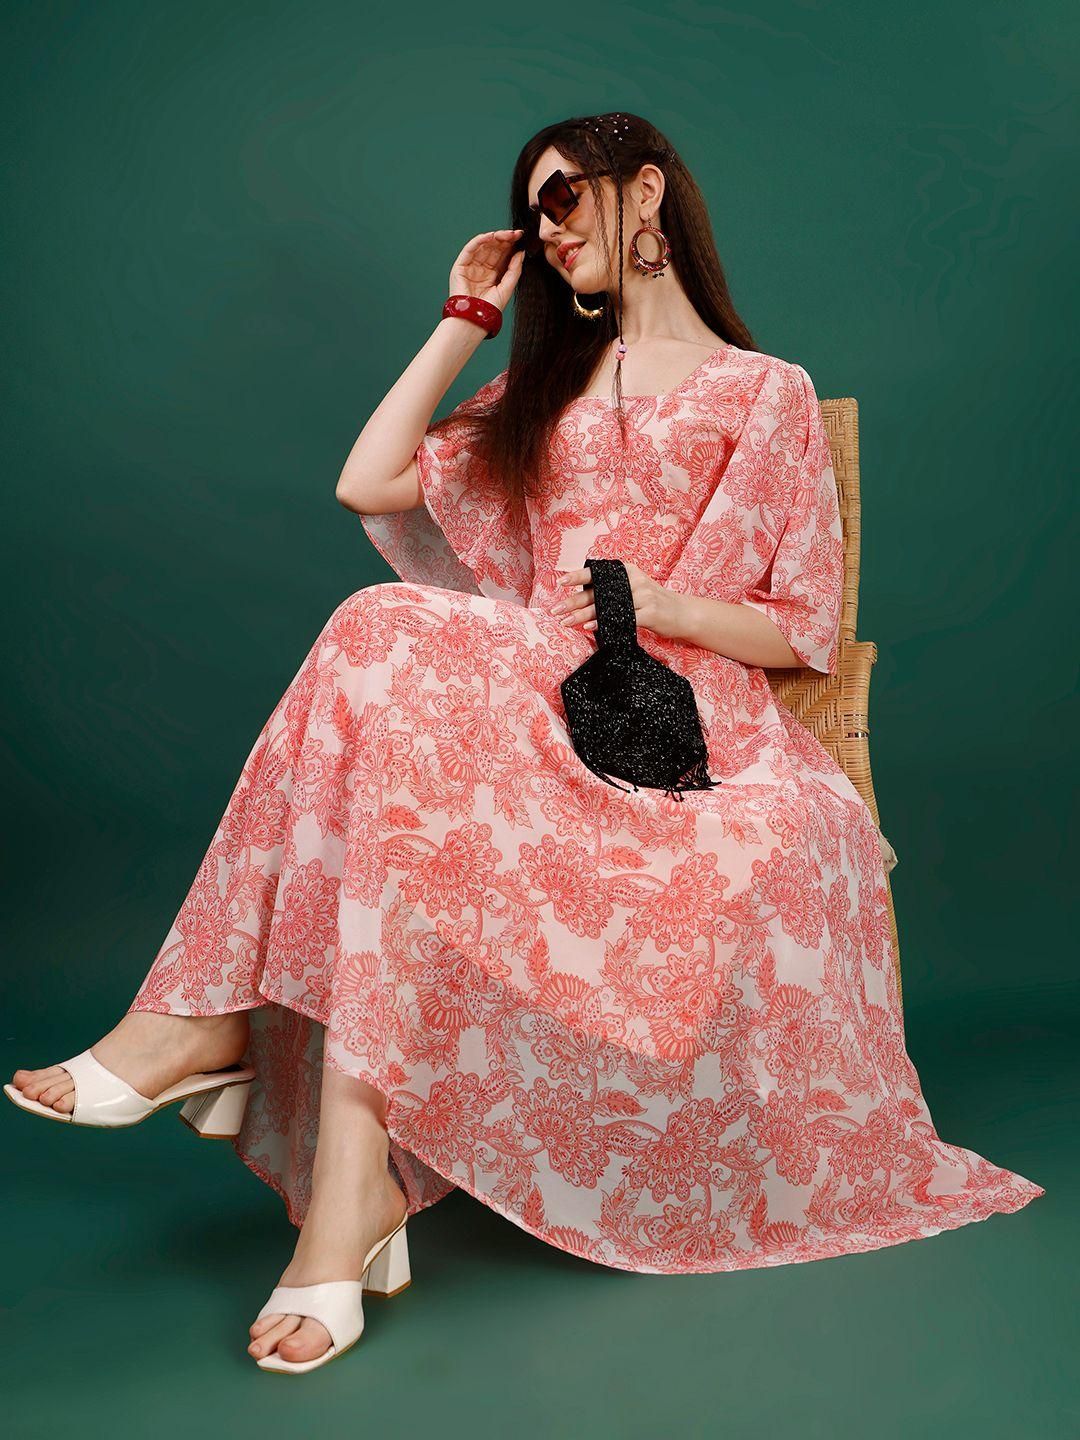 Plus Size Women's Georgette Floral Print Flared Maxi Dress